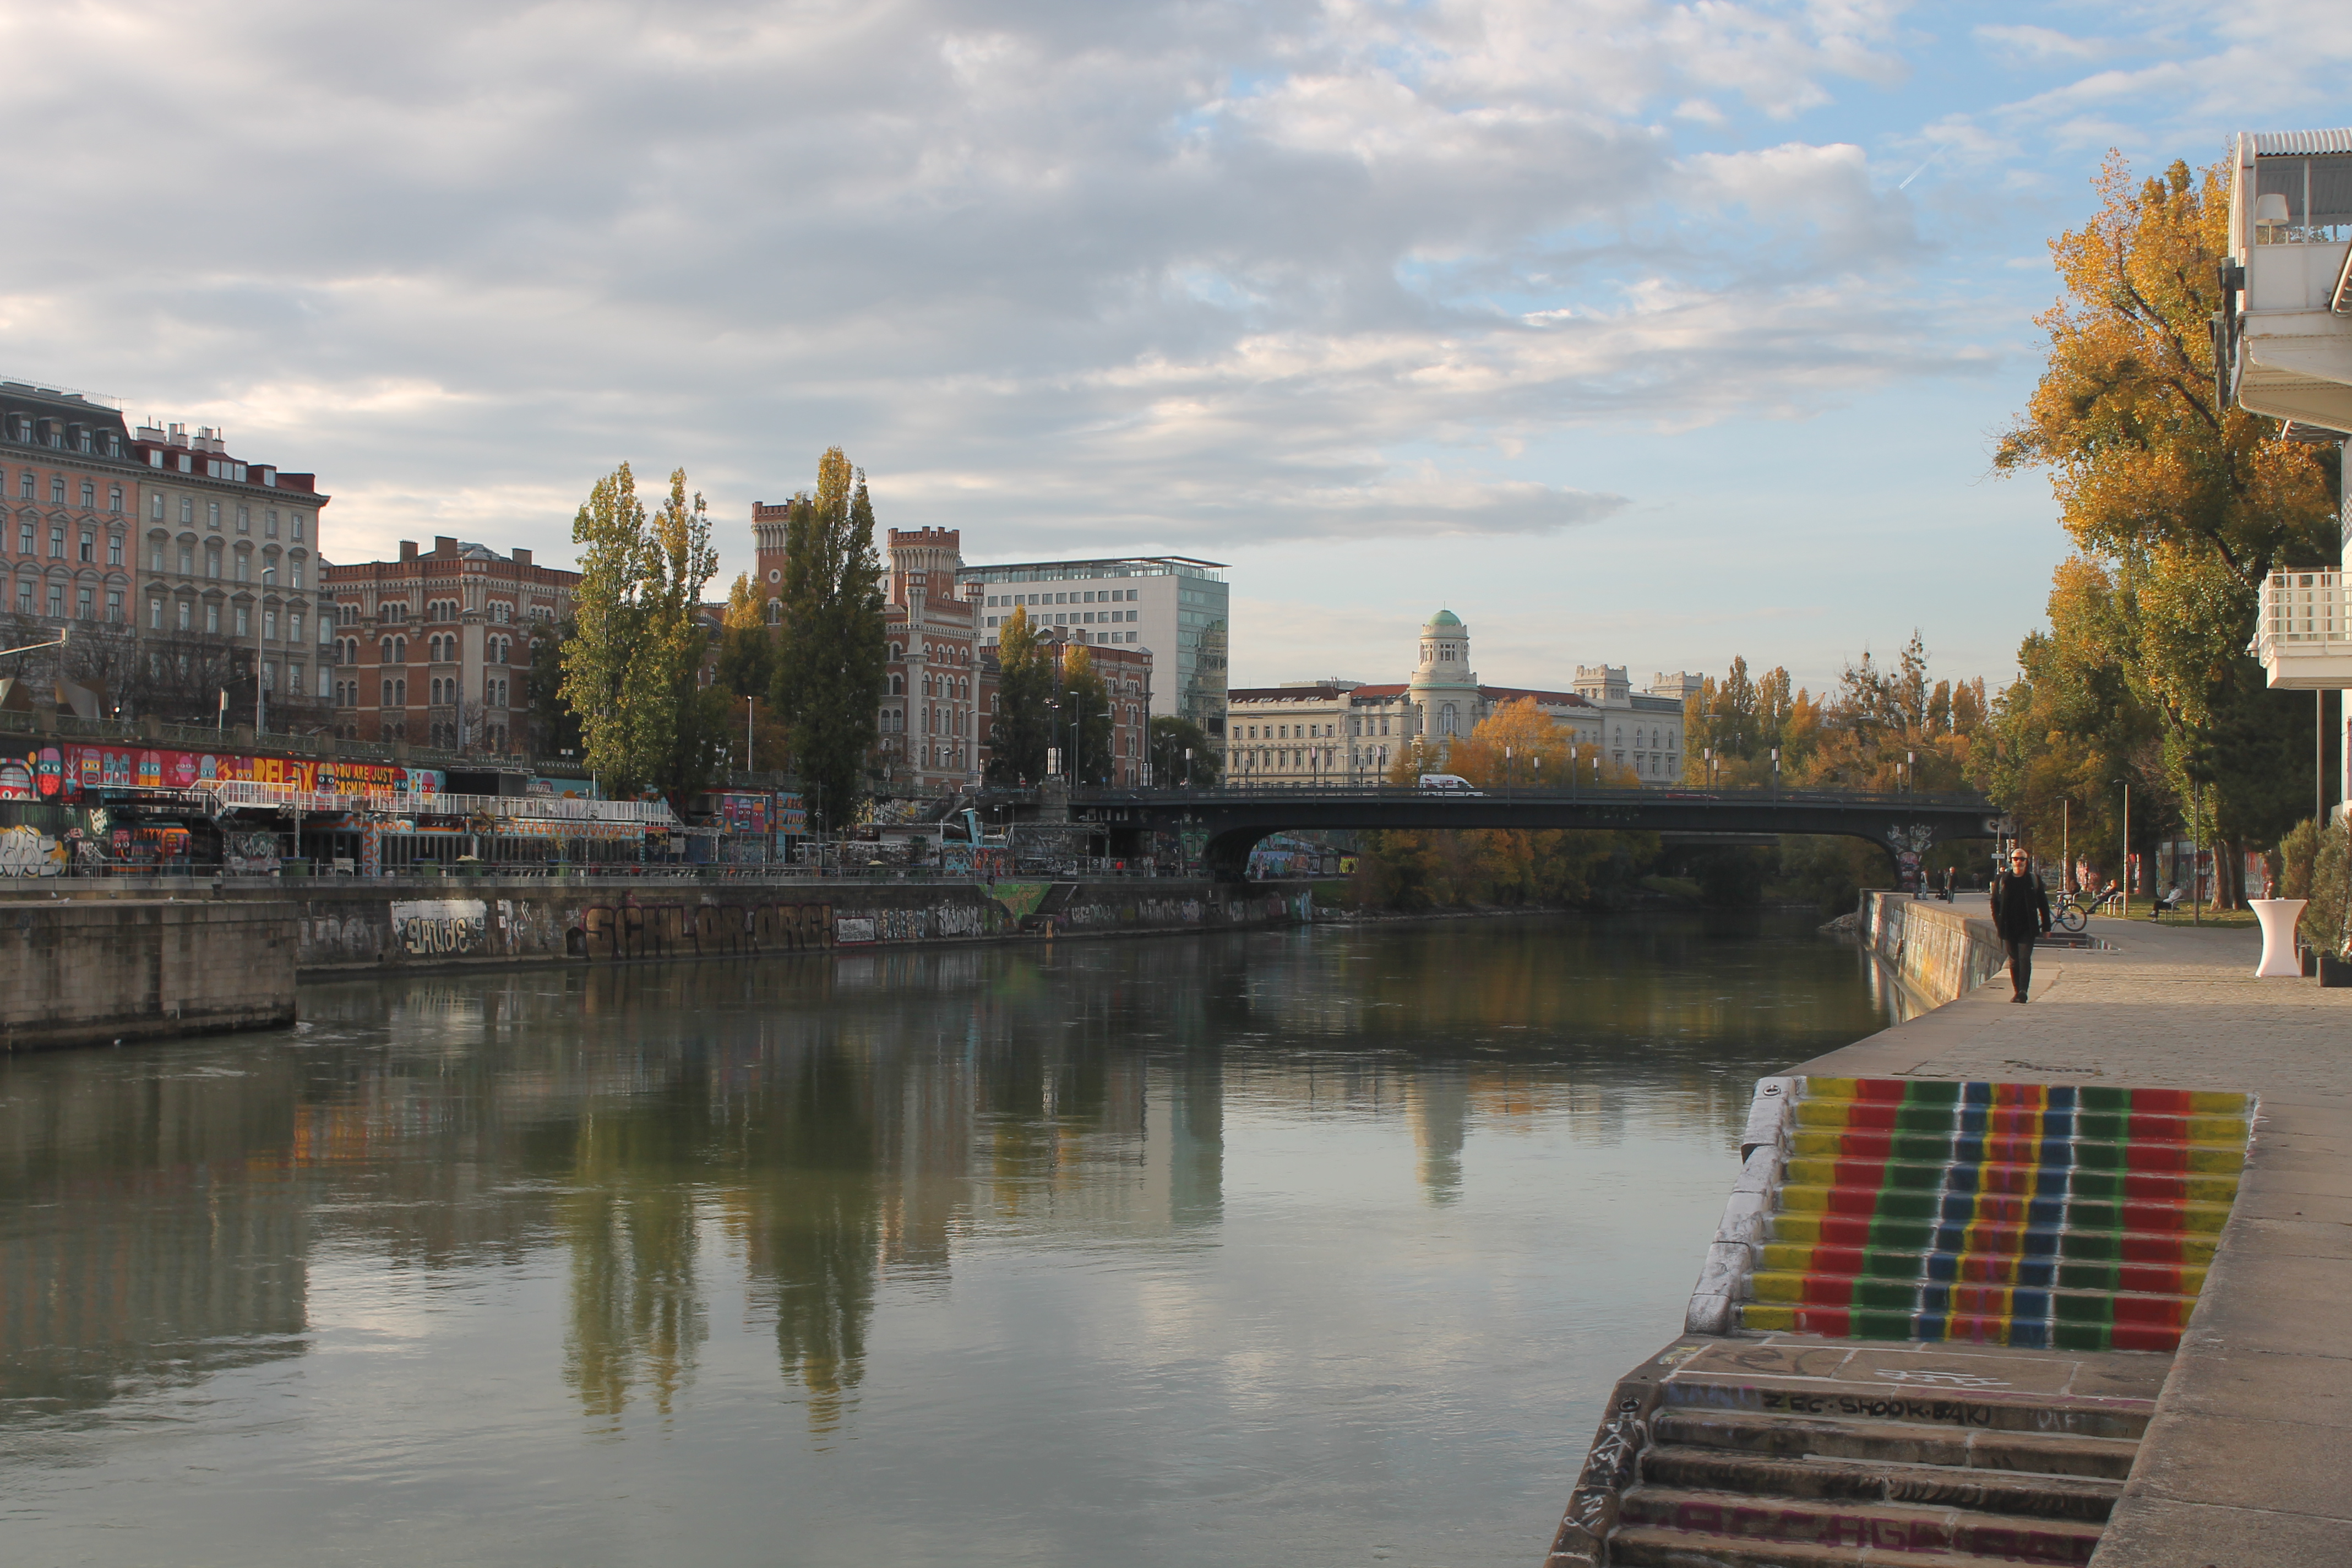 lungo il canale "Donaukanal" ph. @poshbackpackers